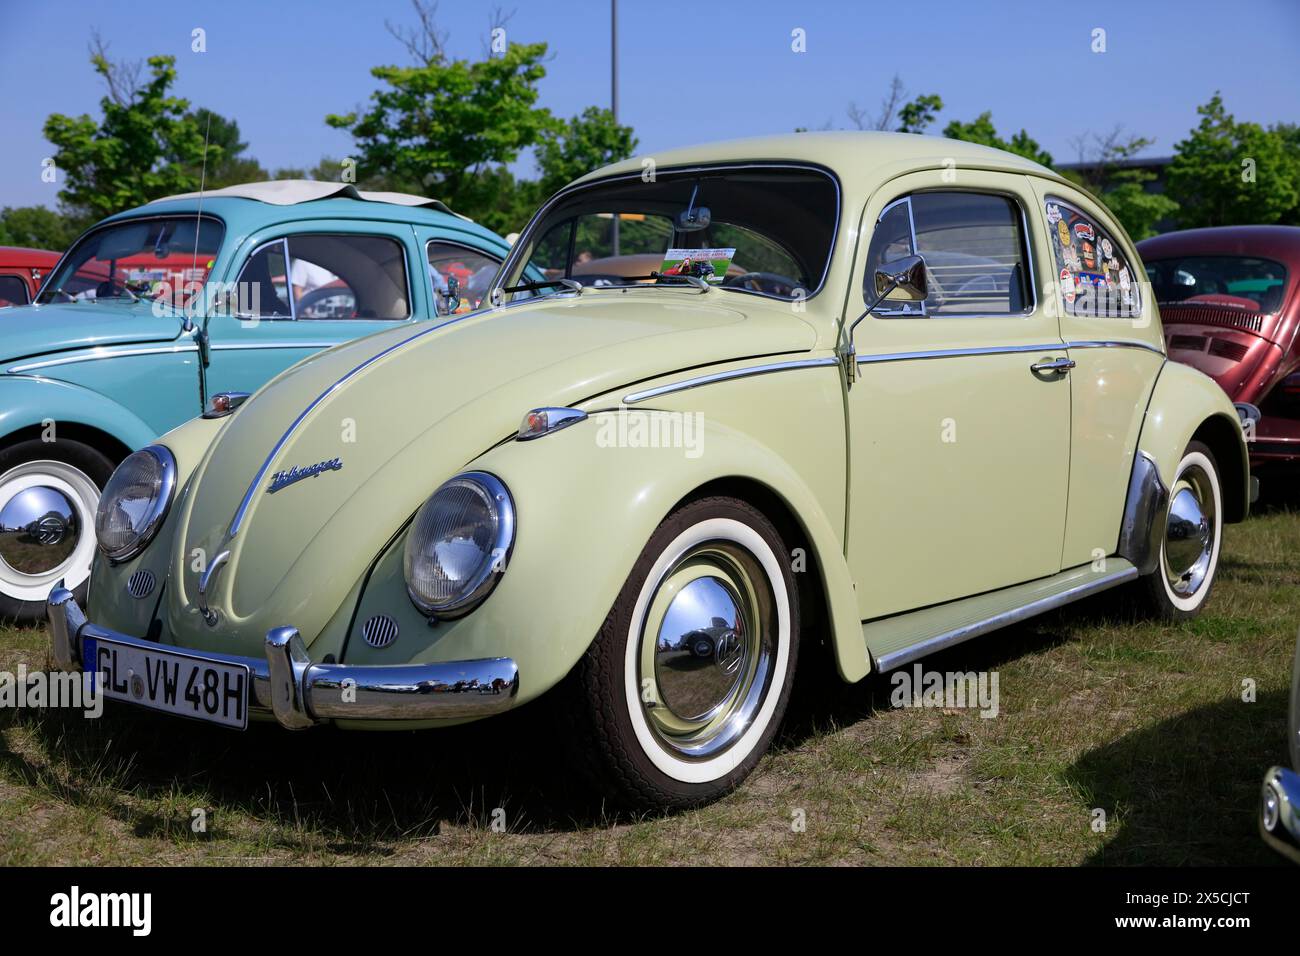 Volkswagen VW Beetle 1300, 41st May Beetle Meeting, Hanover, Lower Saxony, Germany Stock Photo